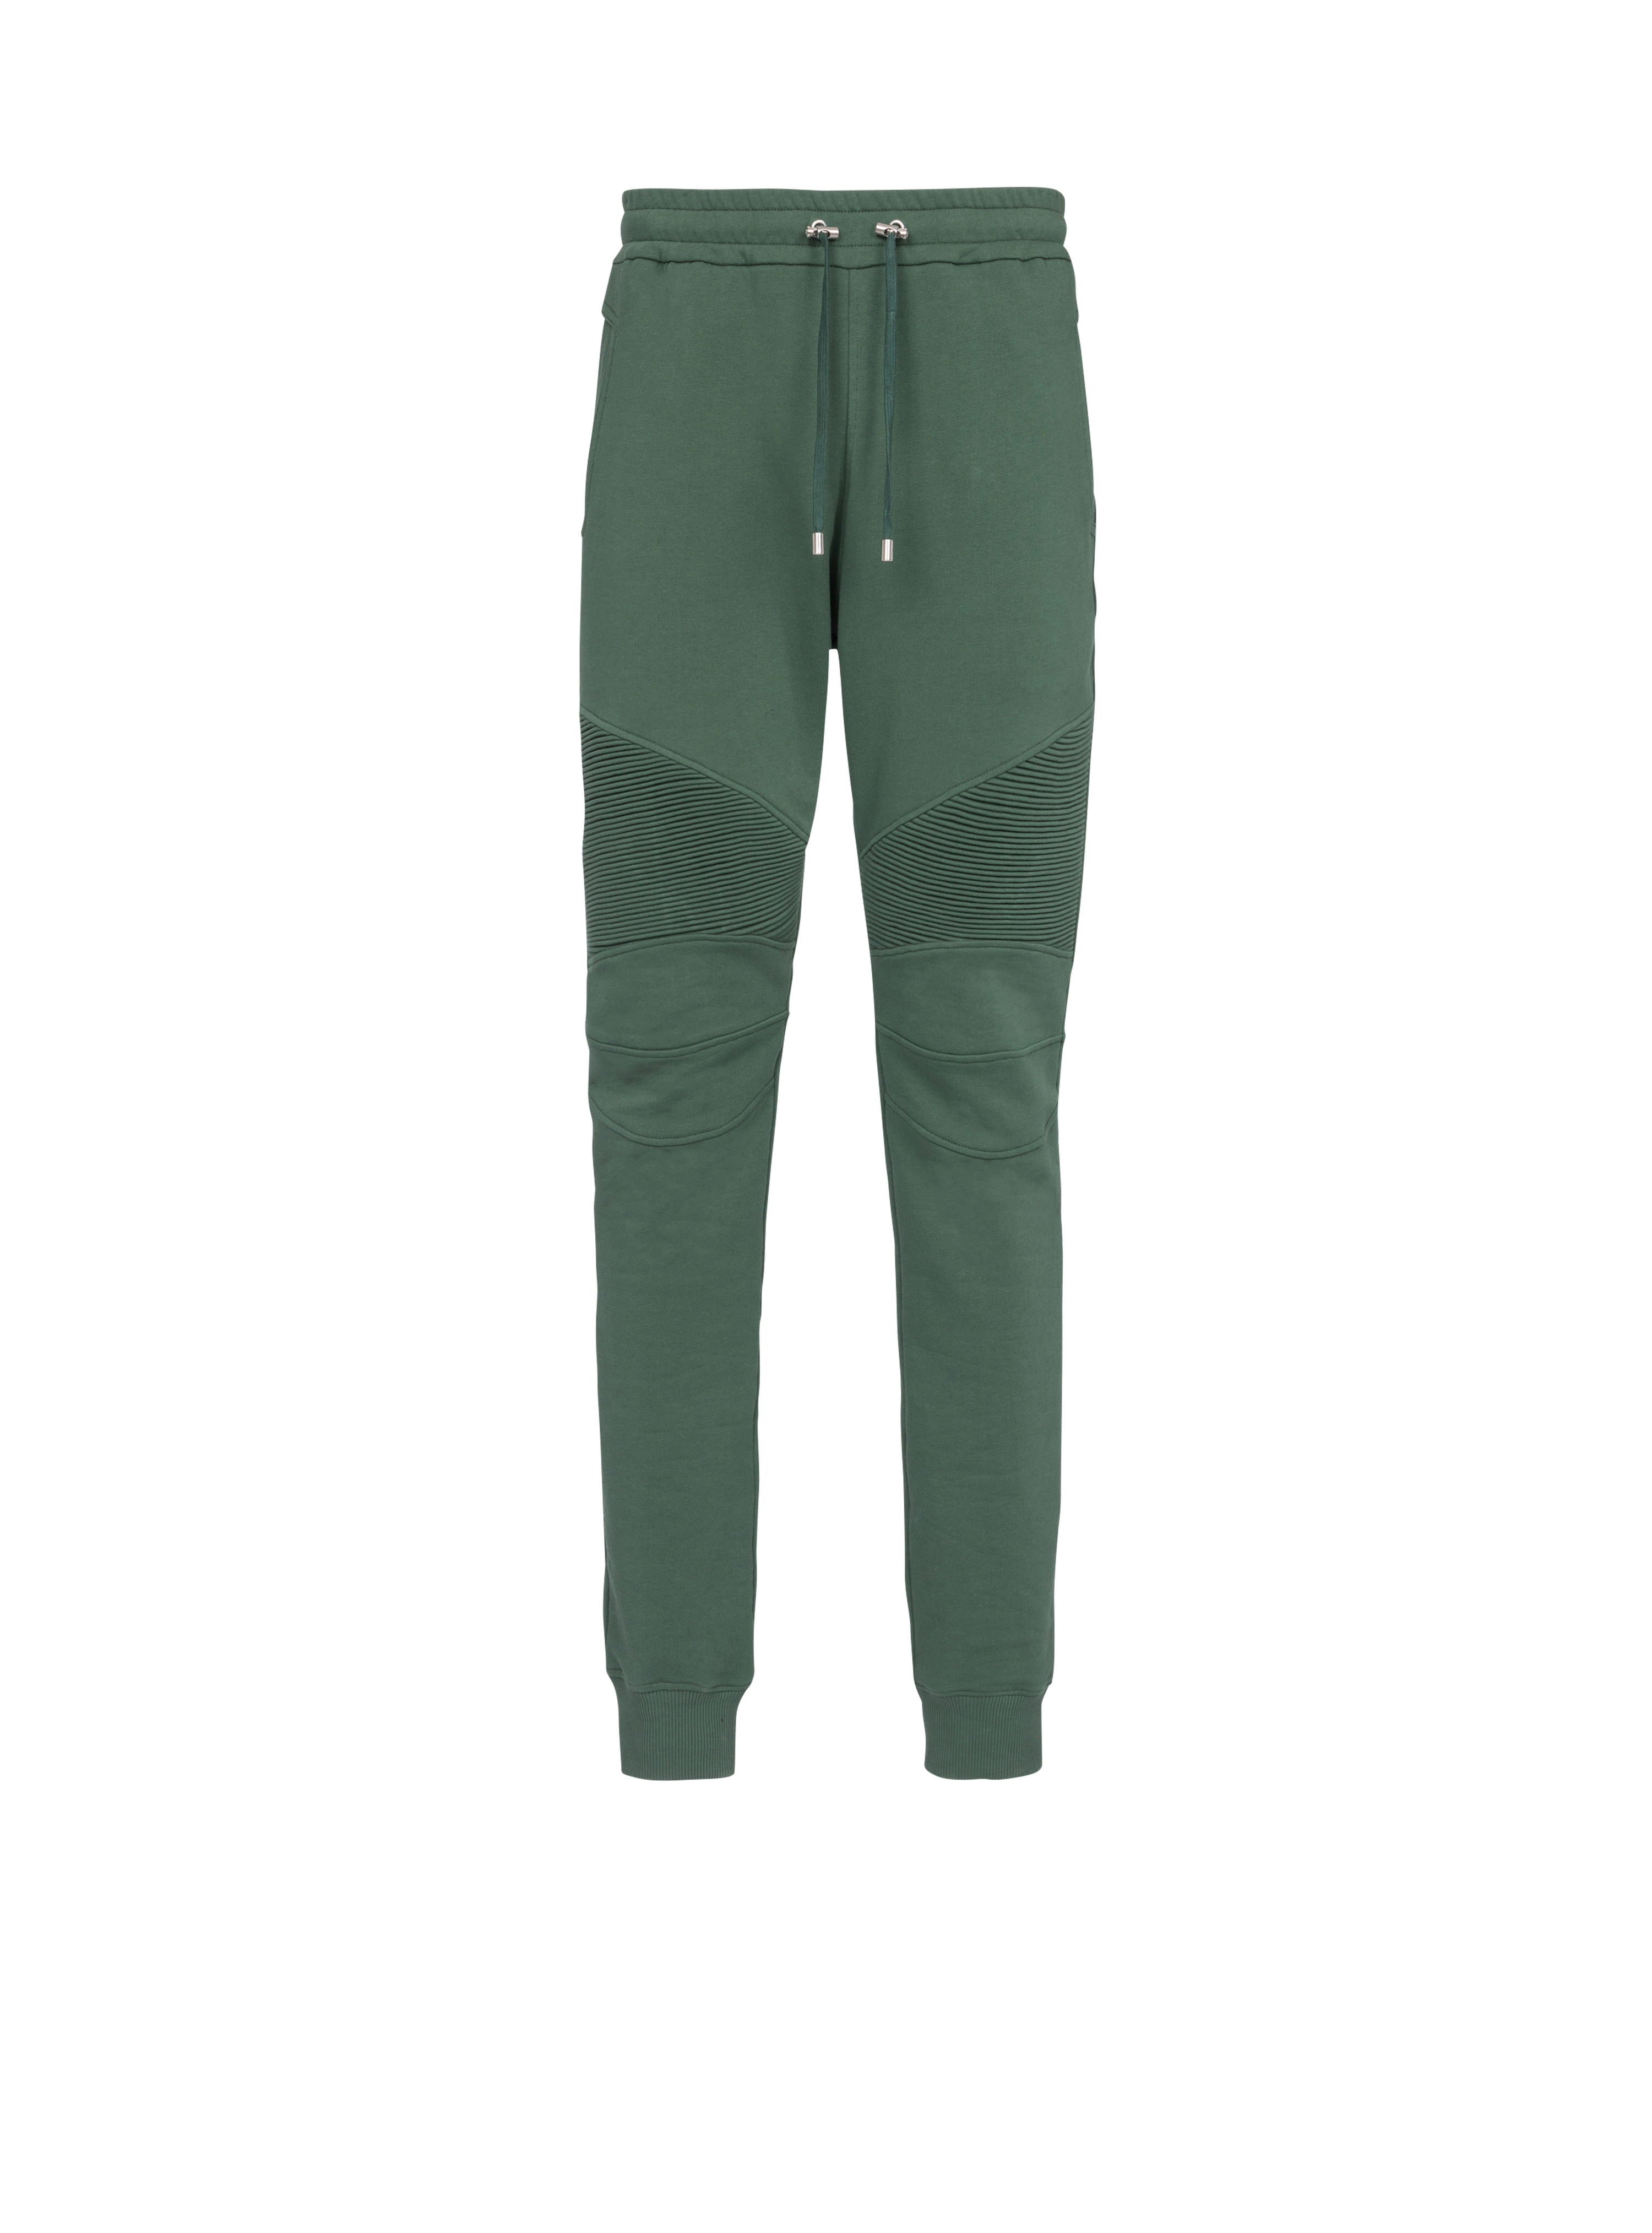 Pantaloni sportivi in cotone con logo Balmain Paris floccato, verde